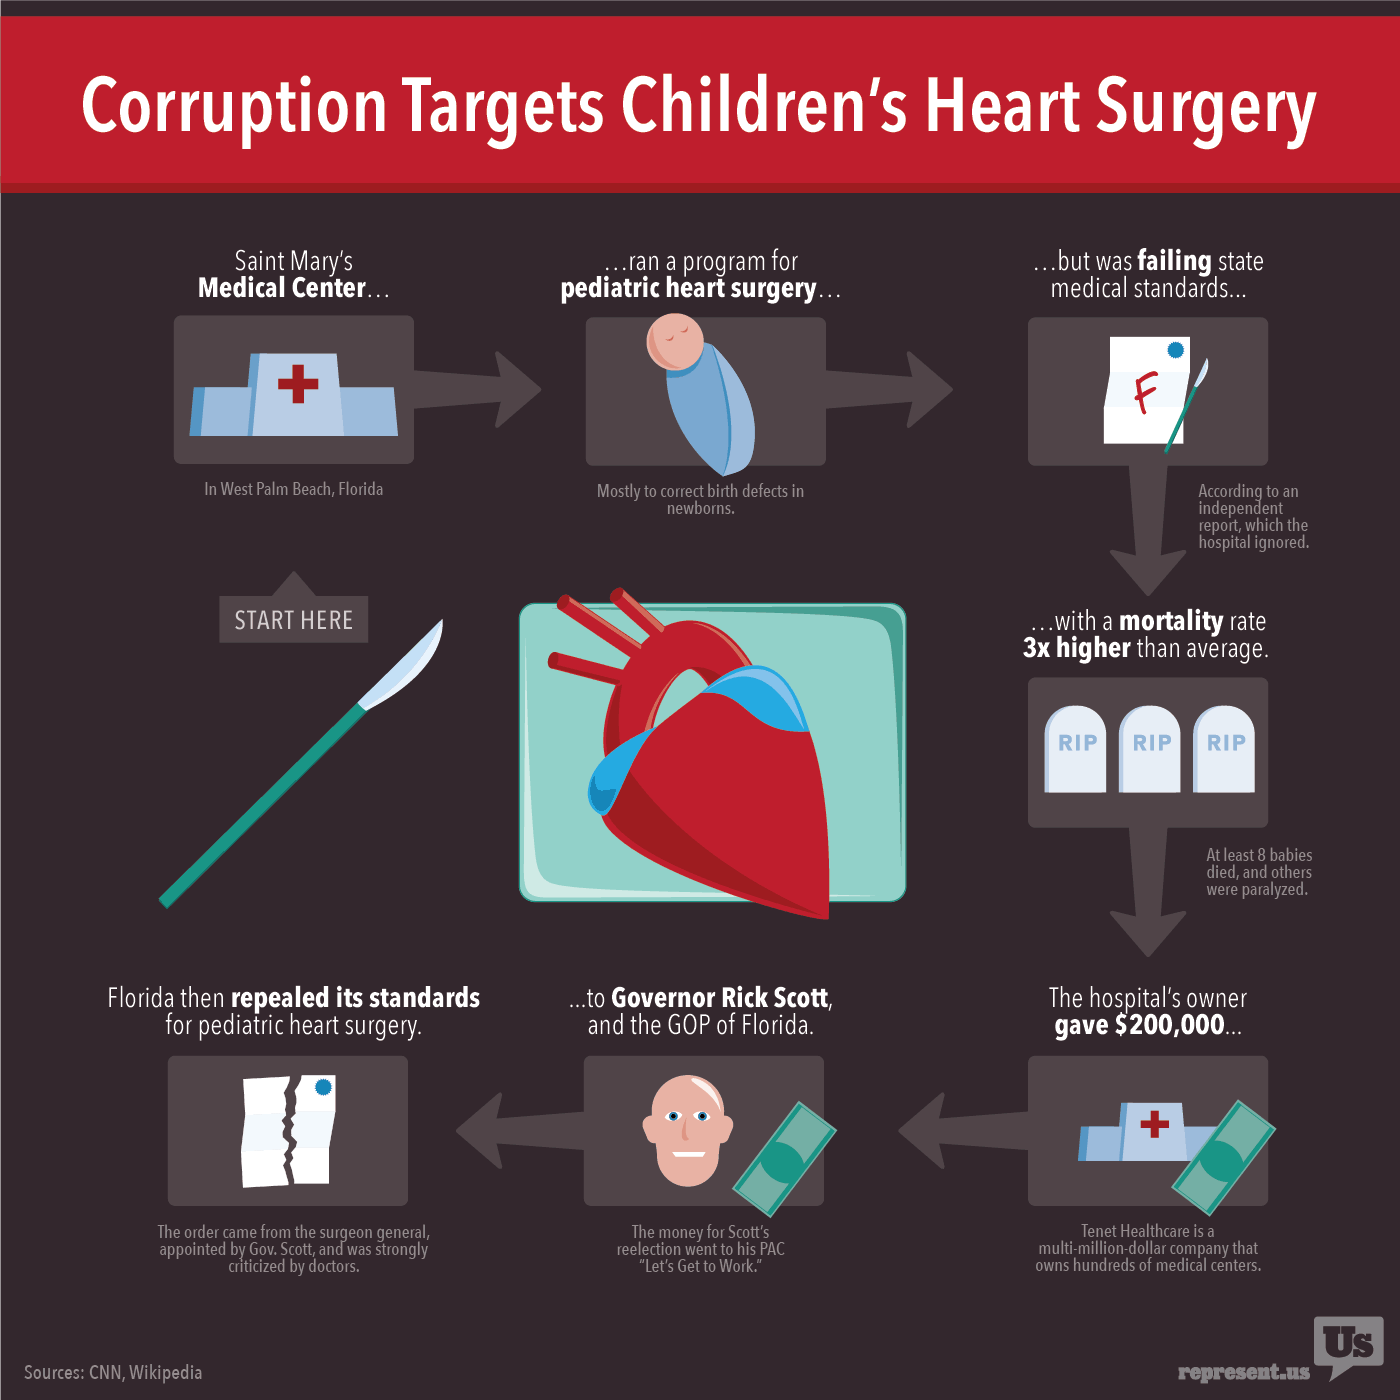 Corruption Targets Children's Heart Surgery (bulletin.represent.us)